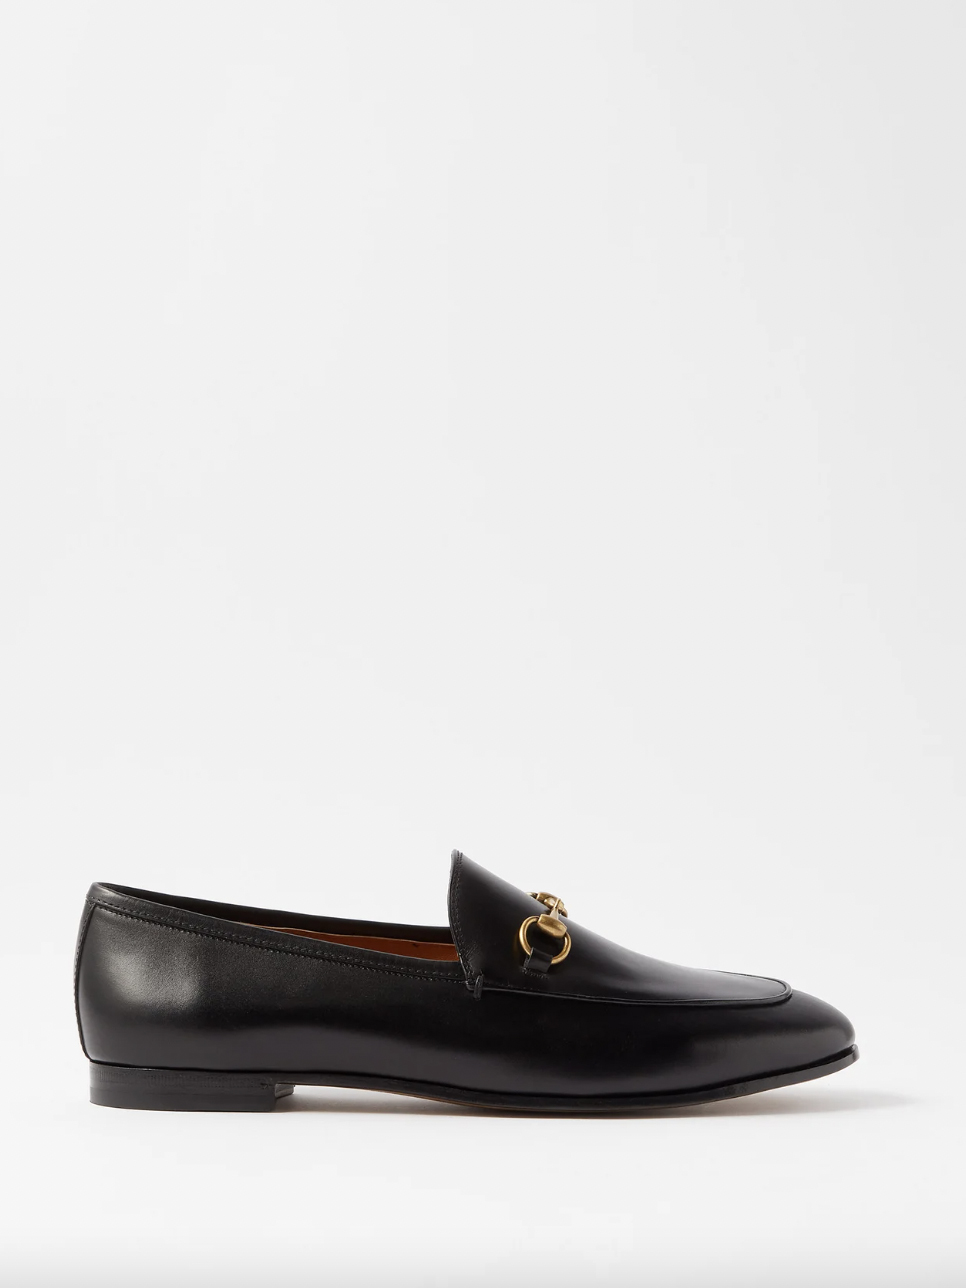 Gucci + Jordaan Horsebit Leather Loafers